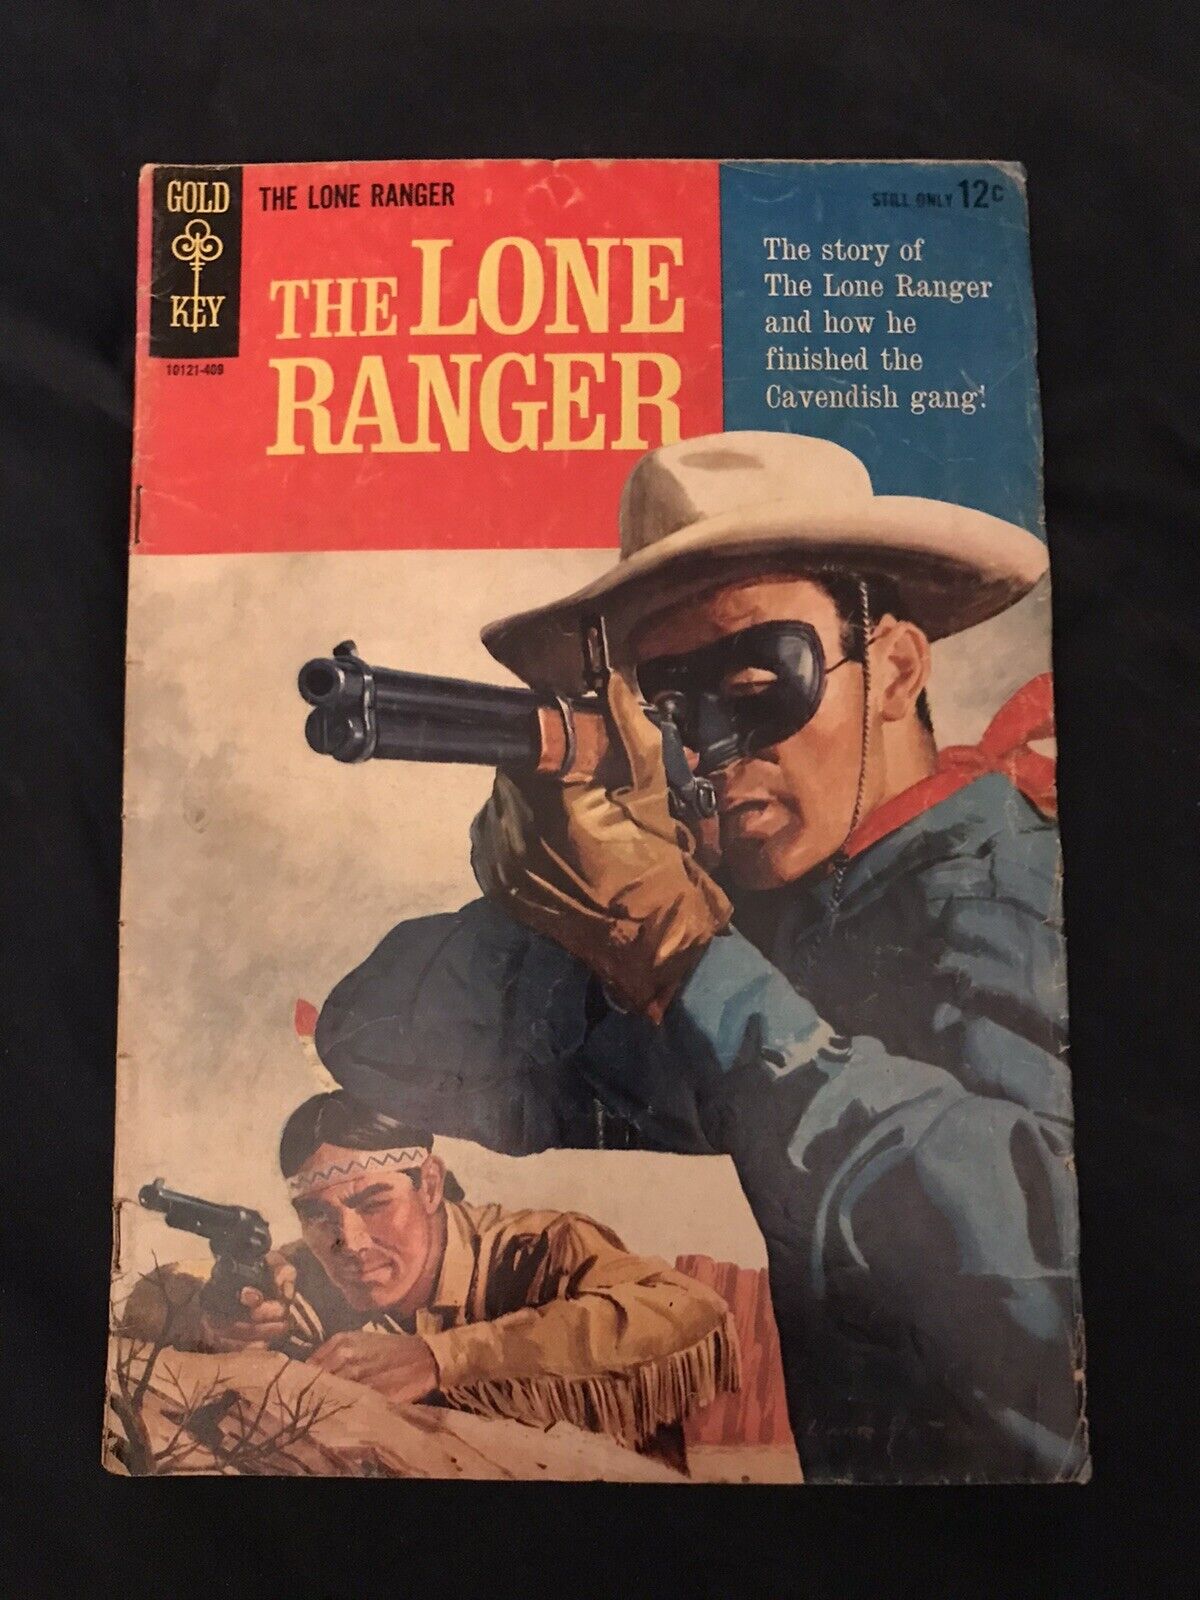 THE LONE RANGER #1 (1964) Origin retold, around G/VG